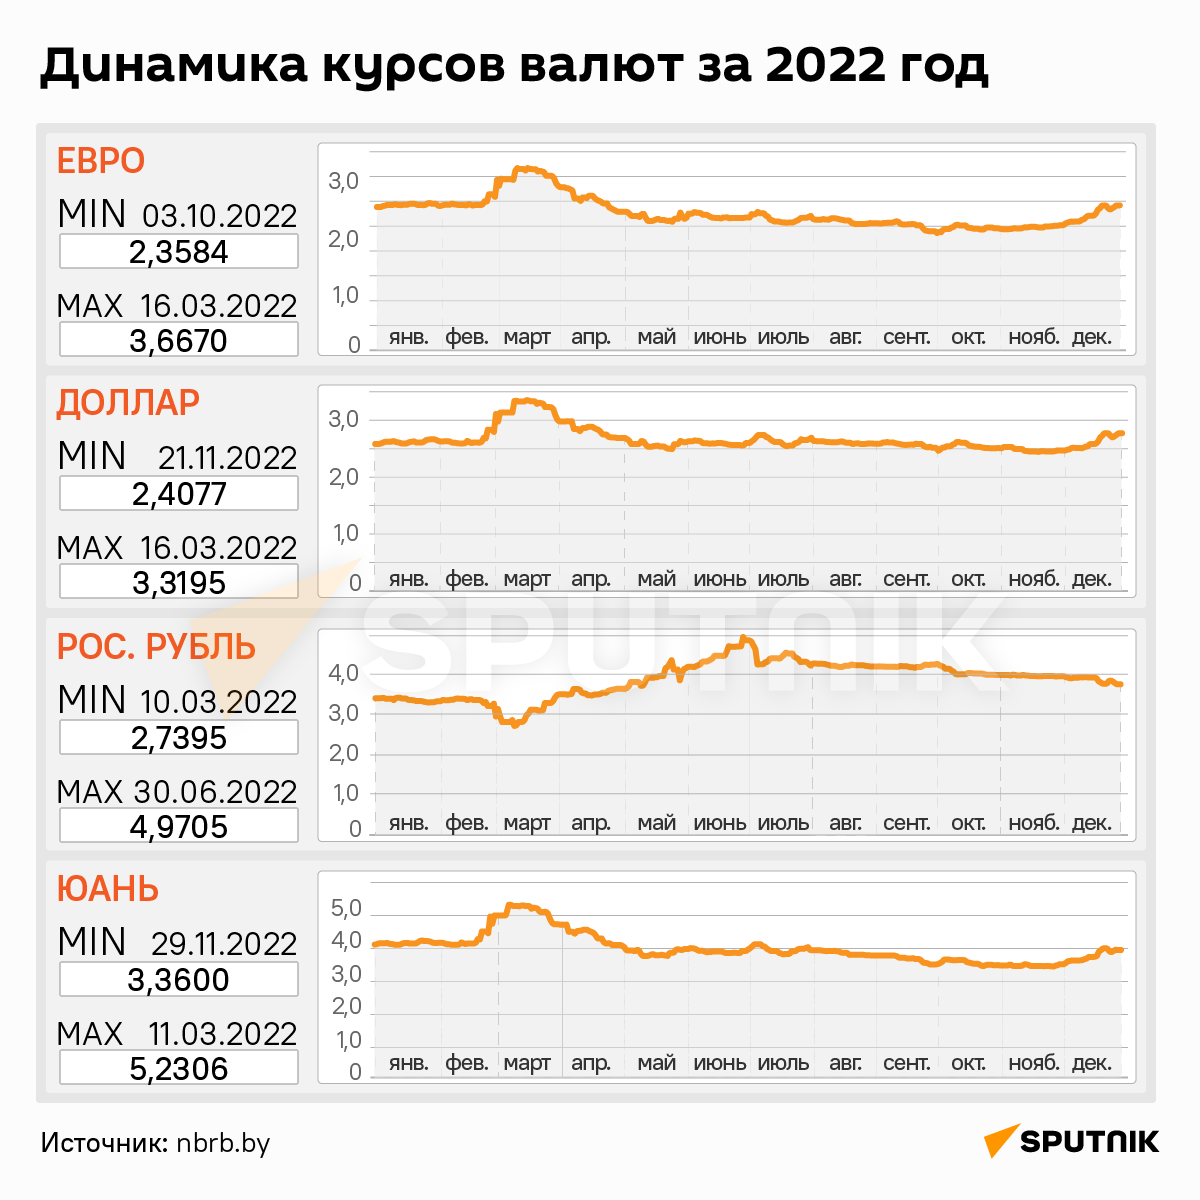 Как менялись курсы валют в 2022 году - Sputnik Беларусь